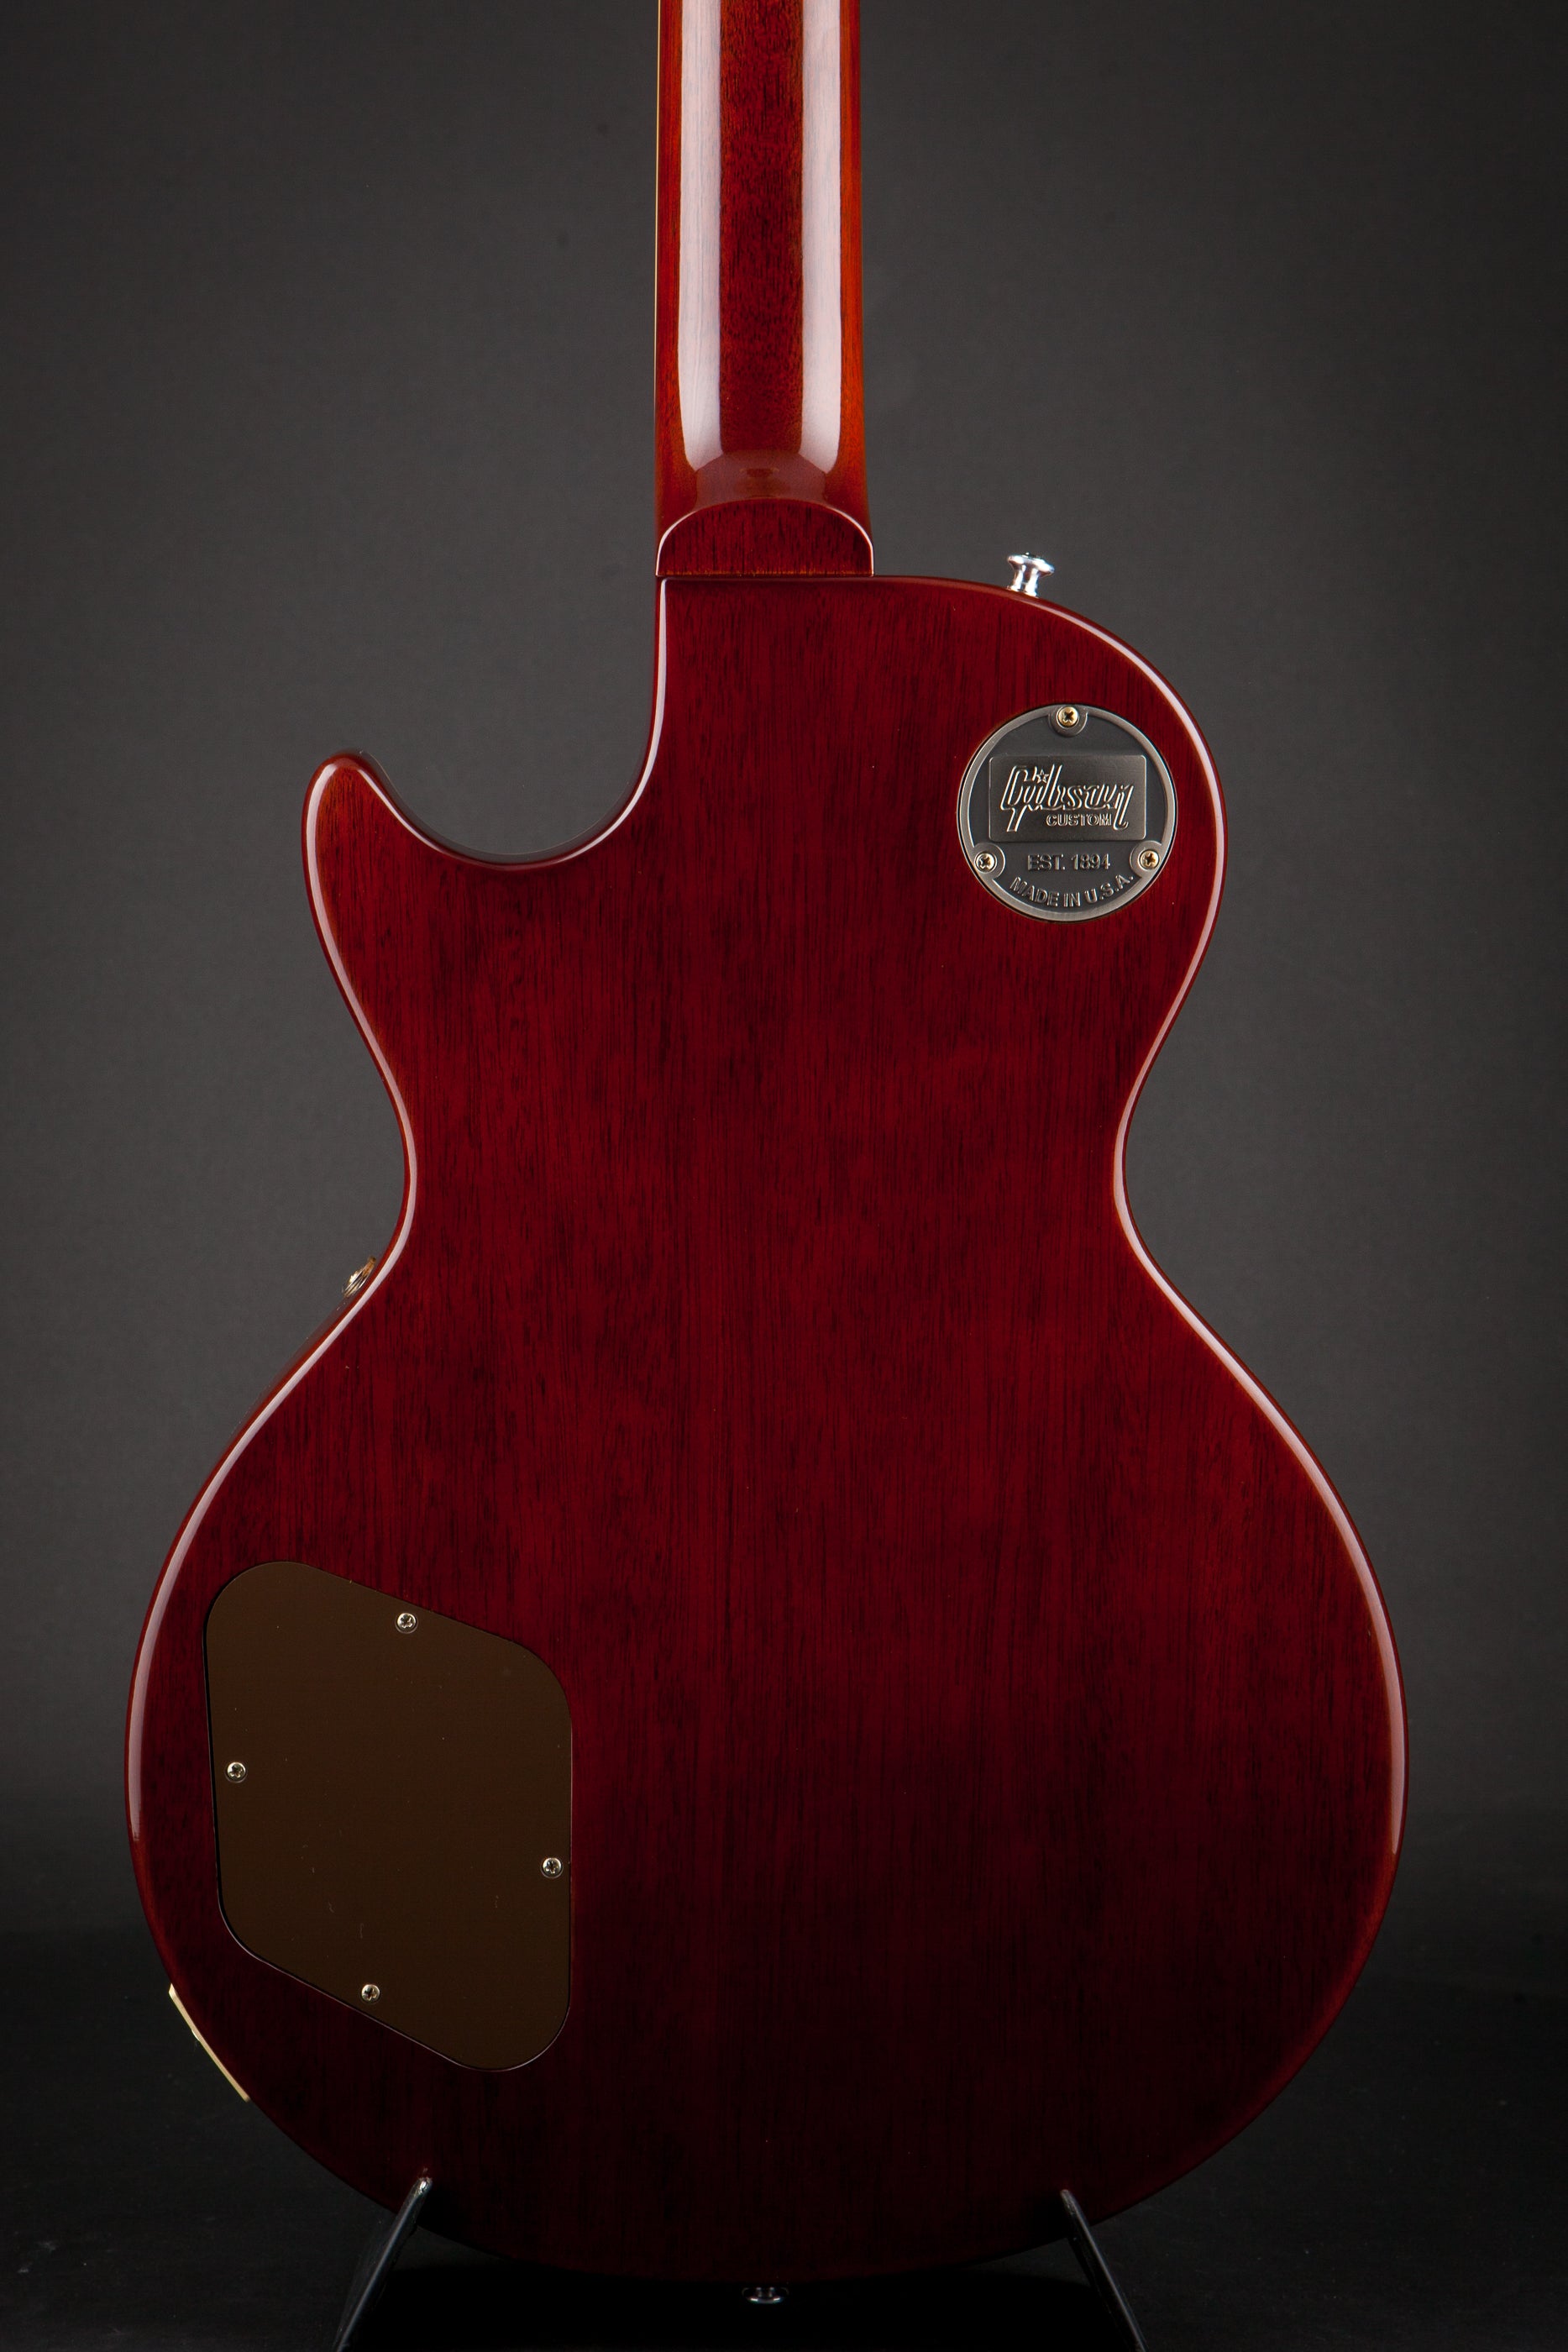 Gibson Custom Shop:Standard Historic VOS 57 Les Paul Gold Top DarkBack #791134